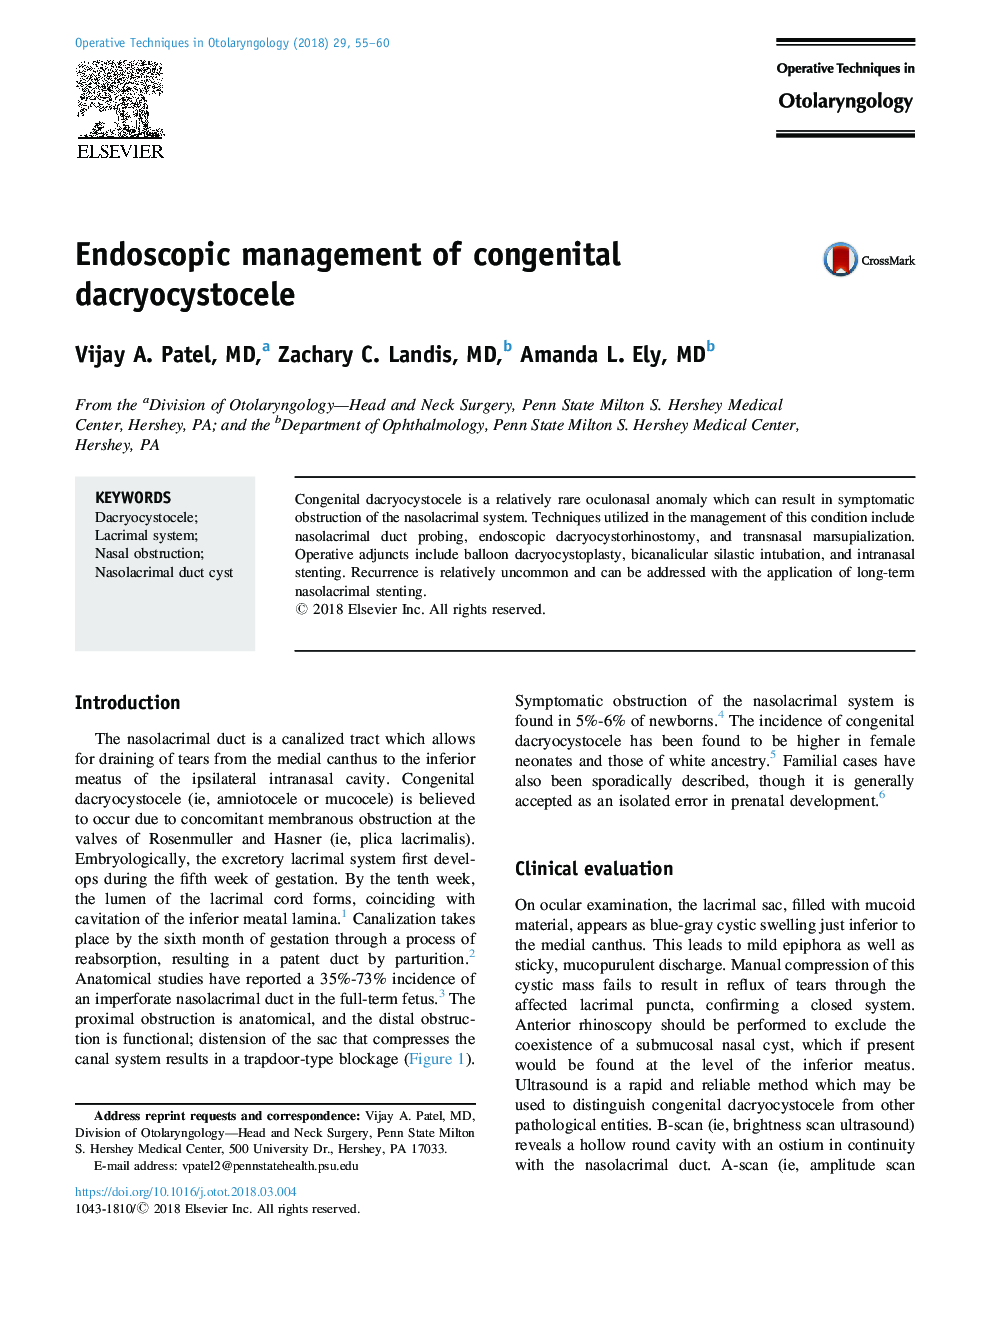 Endoscopic management of congenital dacryocystocele